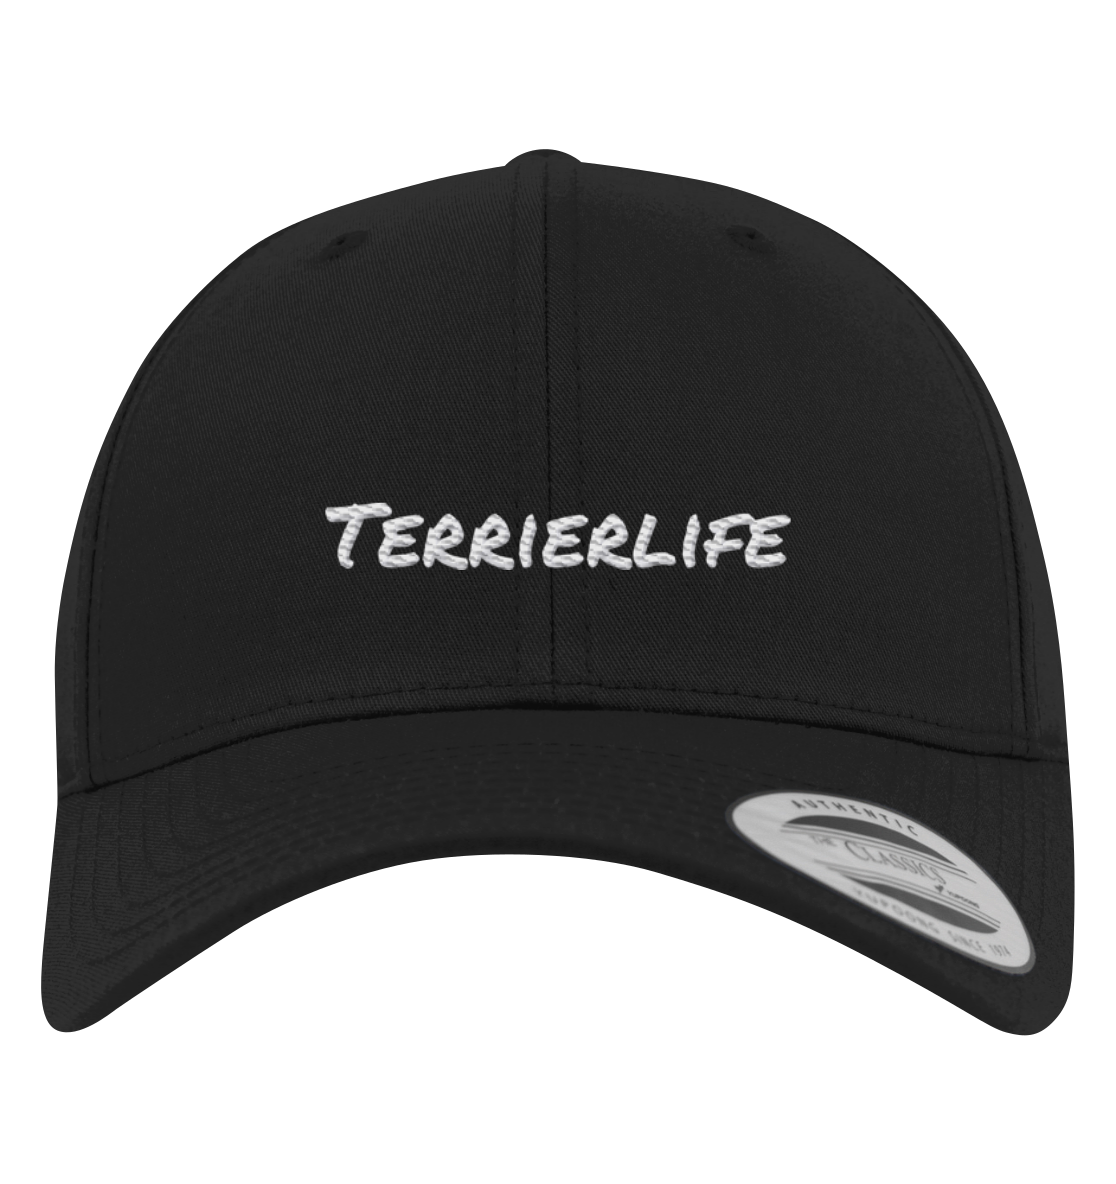 Terrierlife - Premium Baseball Cap